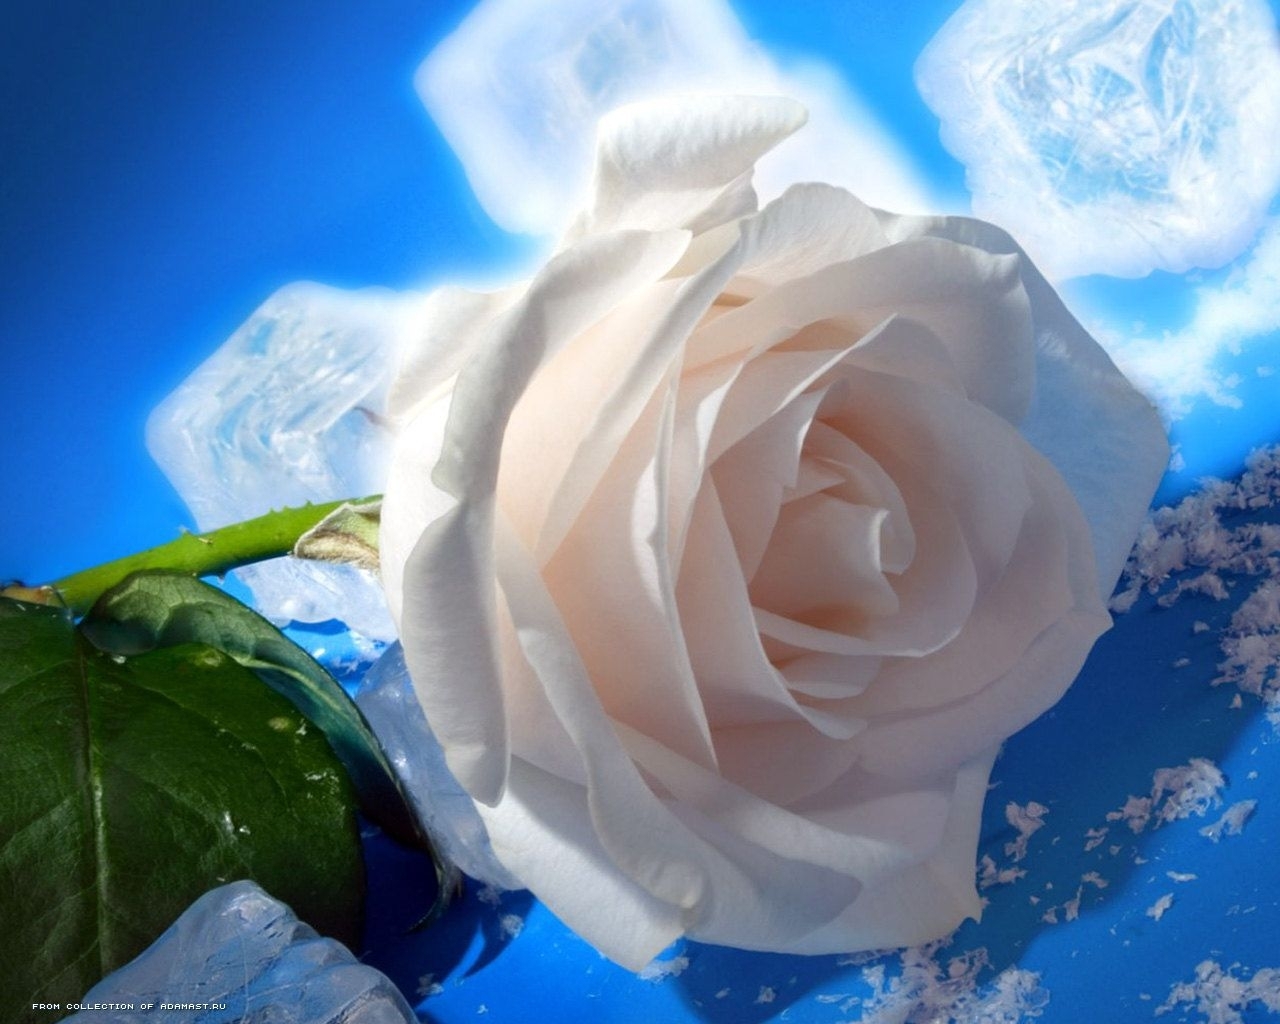 Descarga gratuita de fondo de pantalla para móvil de Flores, Roses, Plantas.